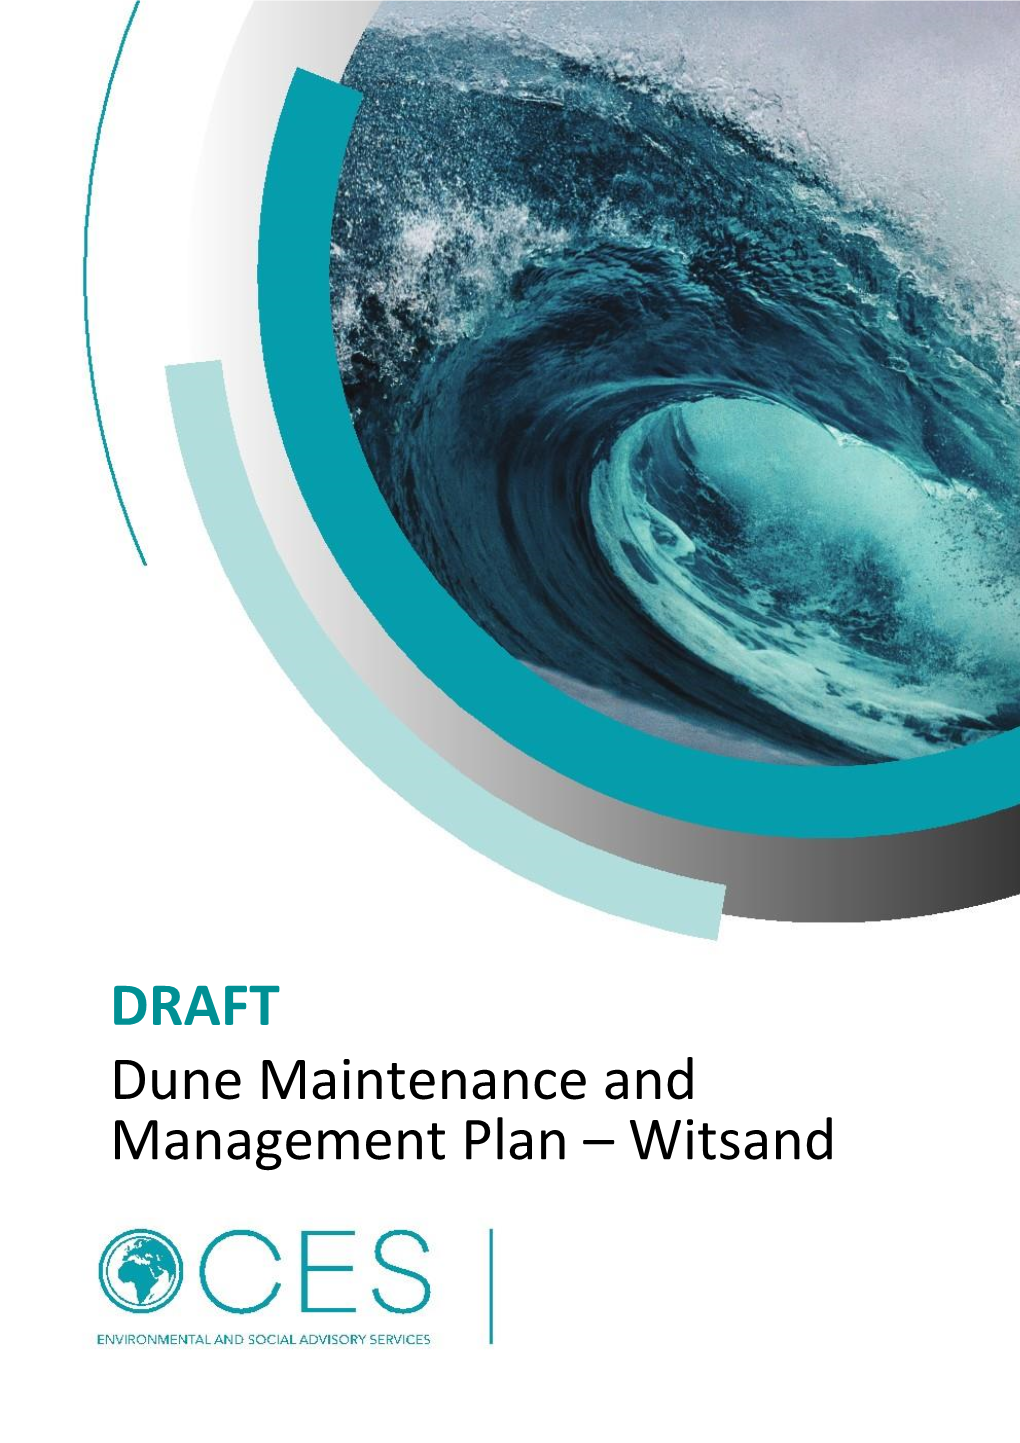 DRAFT Dune Maintenance and Management Plan – Witsand